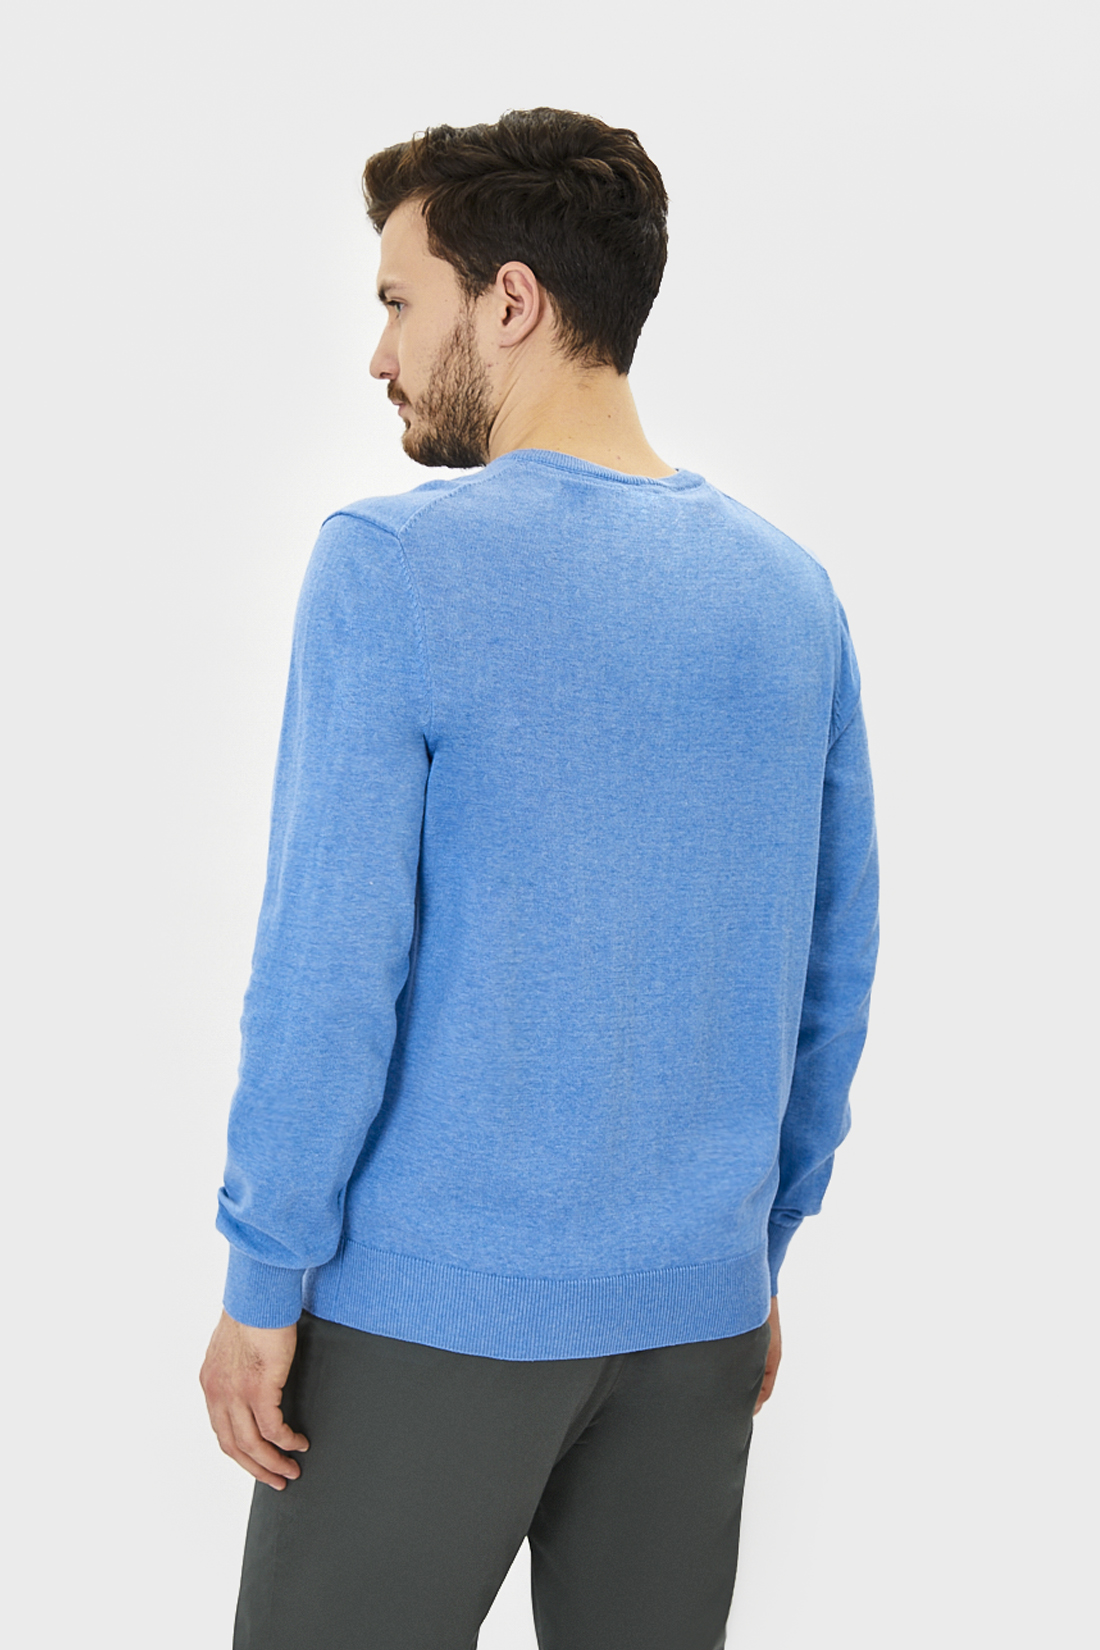 Базовый пуловер с хлопком (арт. baon B631201), размер 3XL, цвет белый Базовый пуловер с хлопком (арт. baon B631201) - фото 2